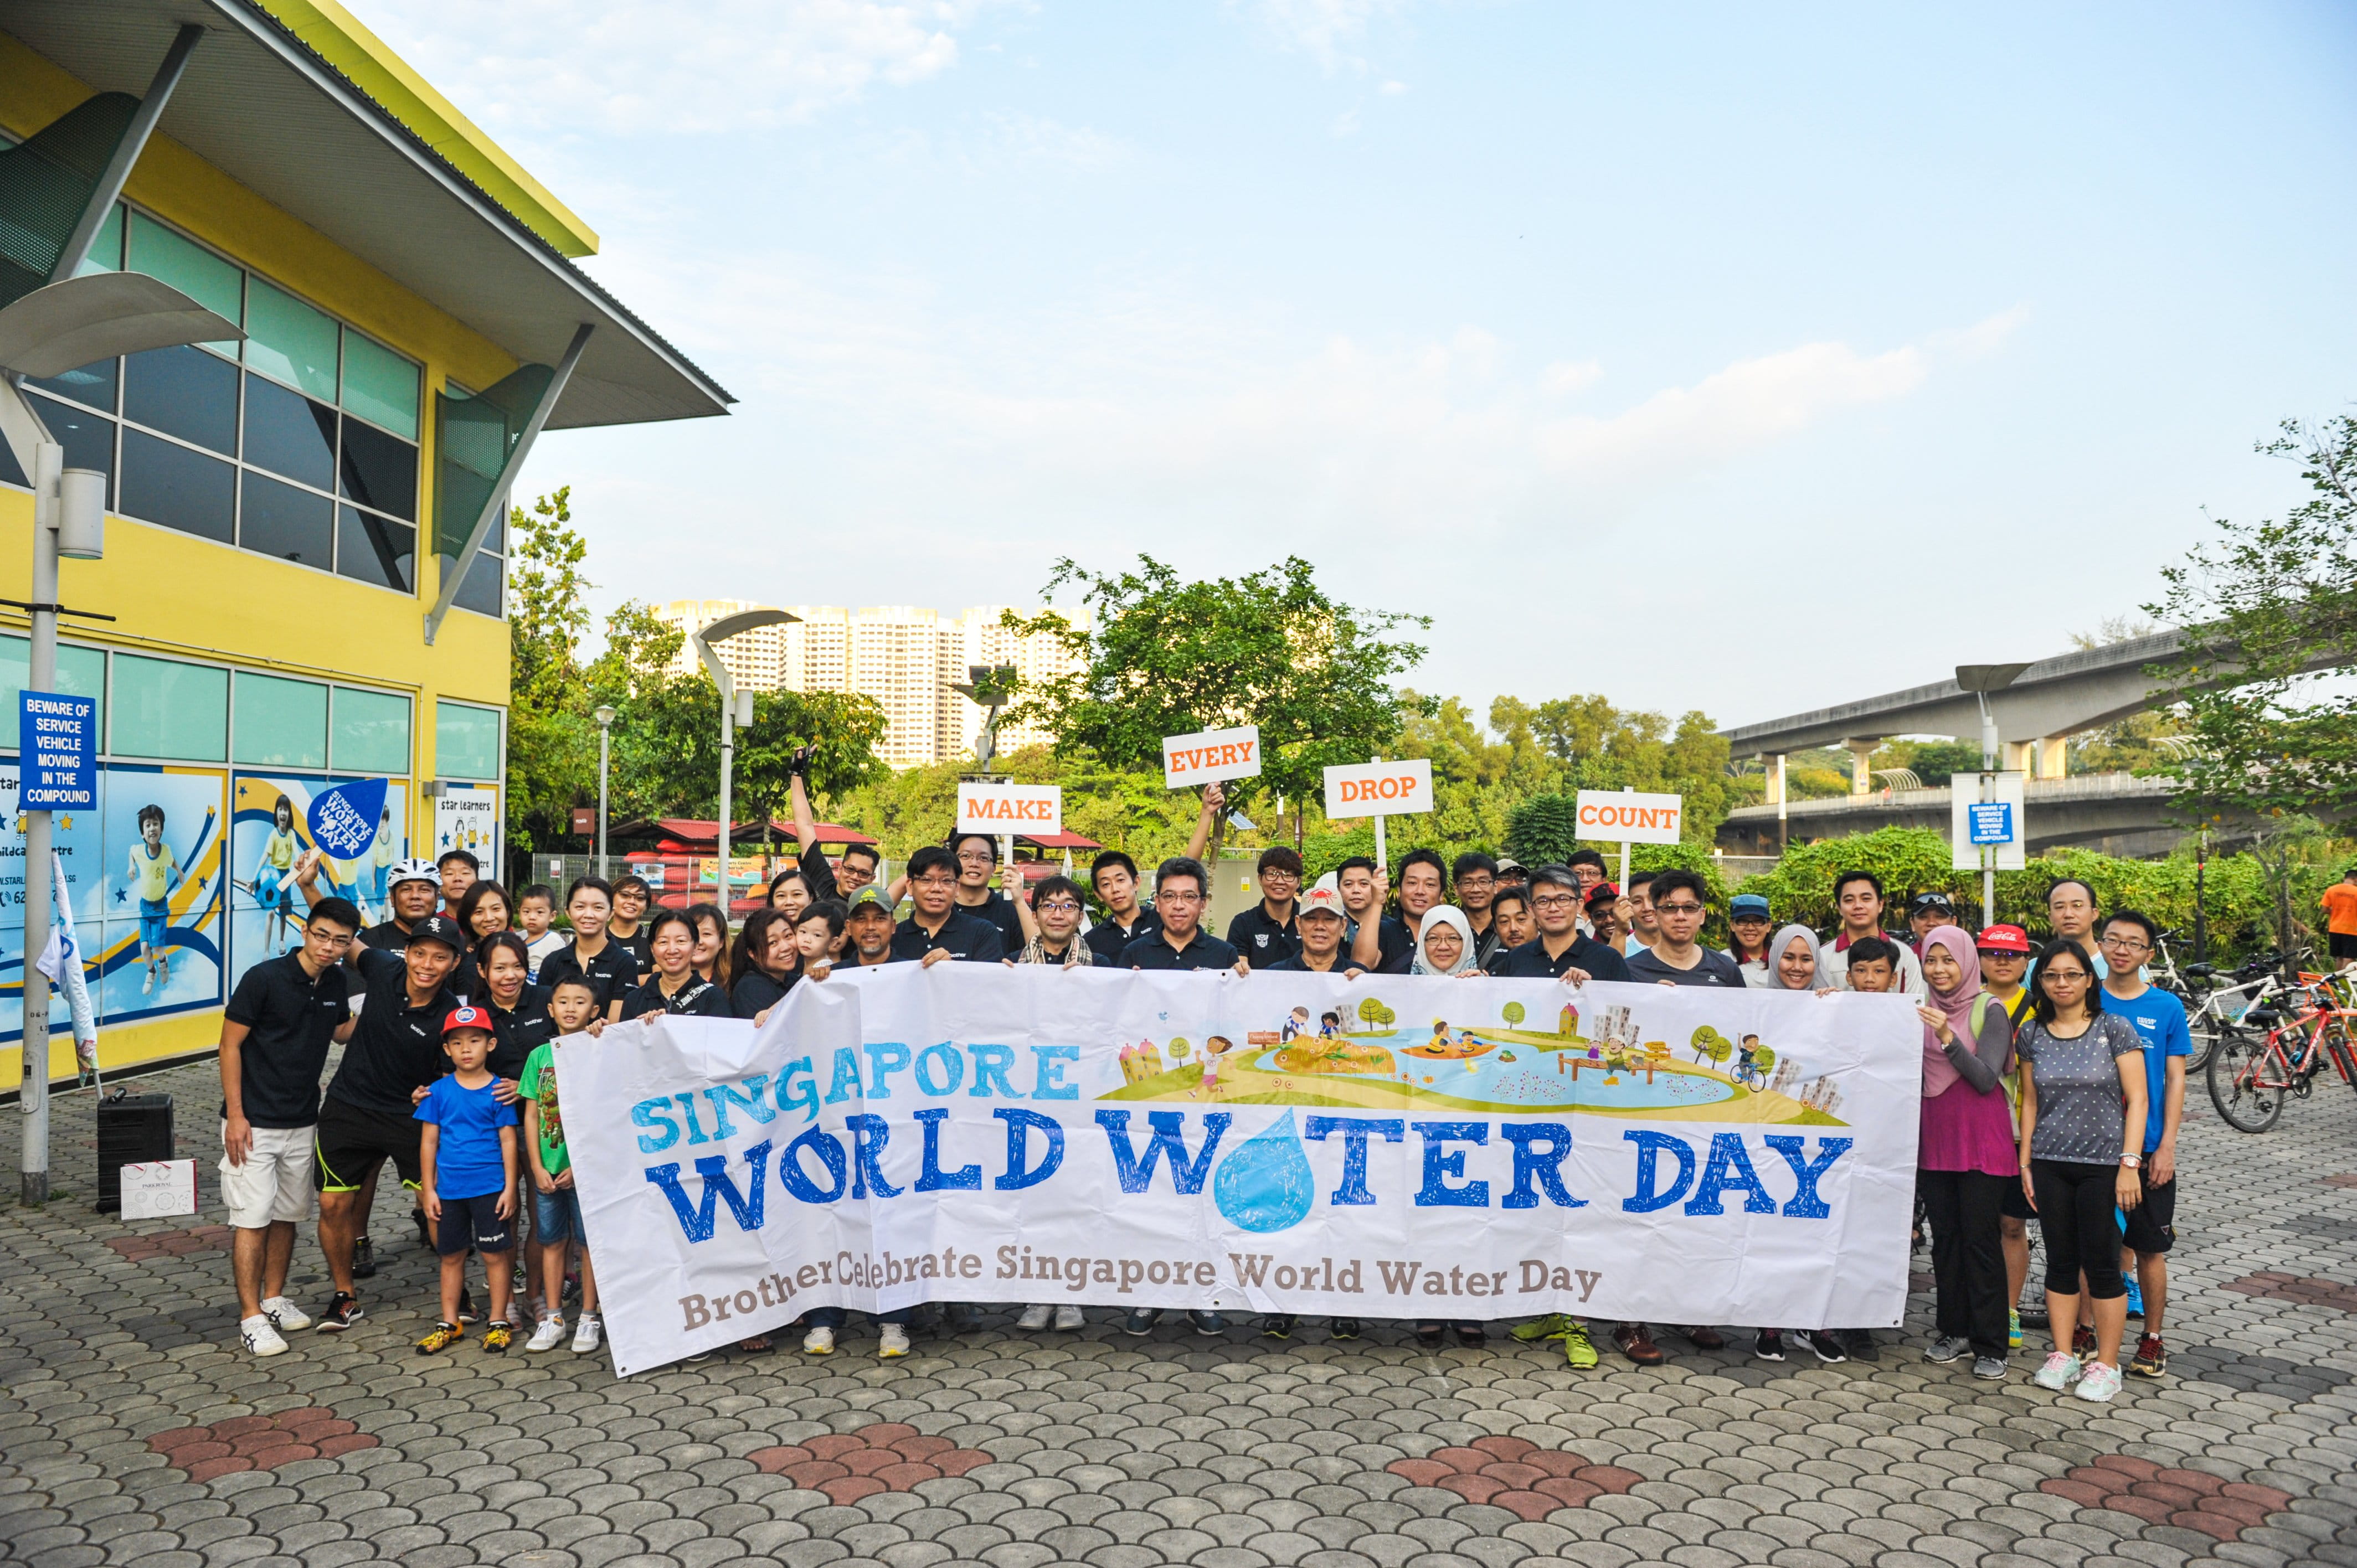 World Water Day 2016